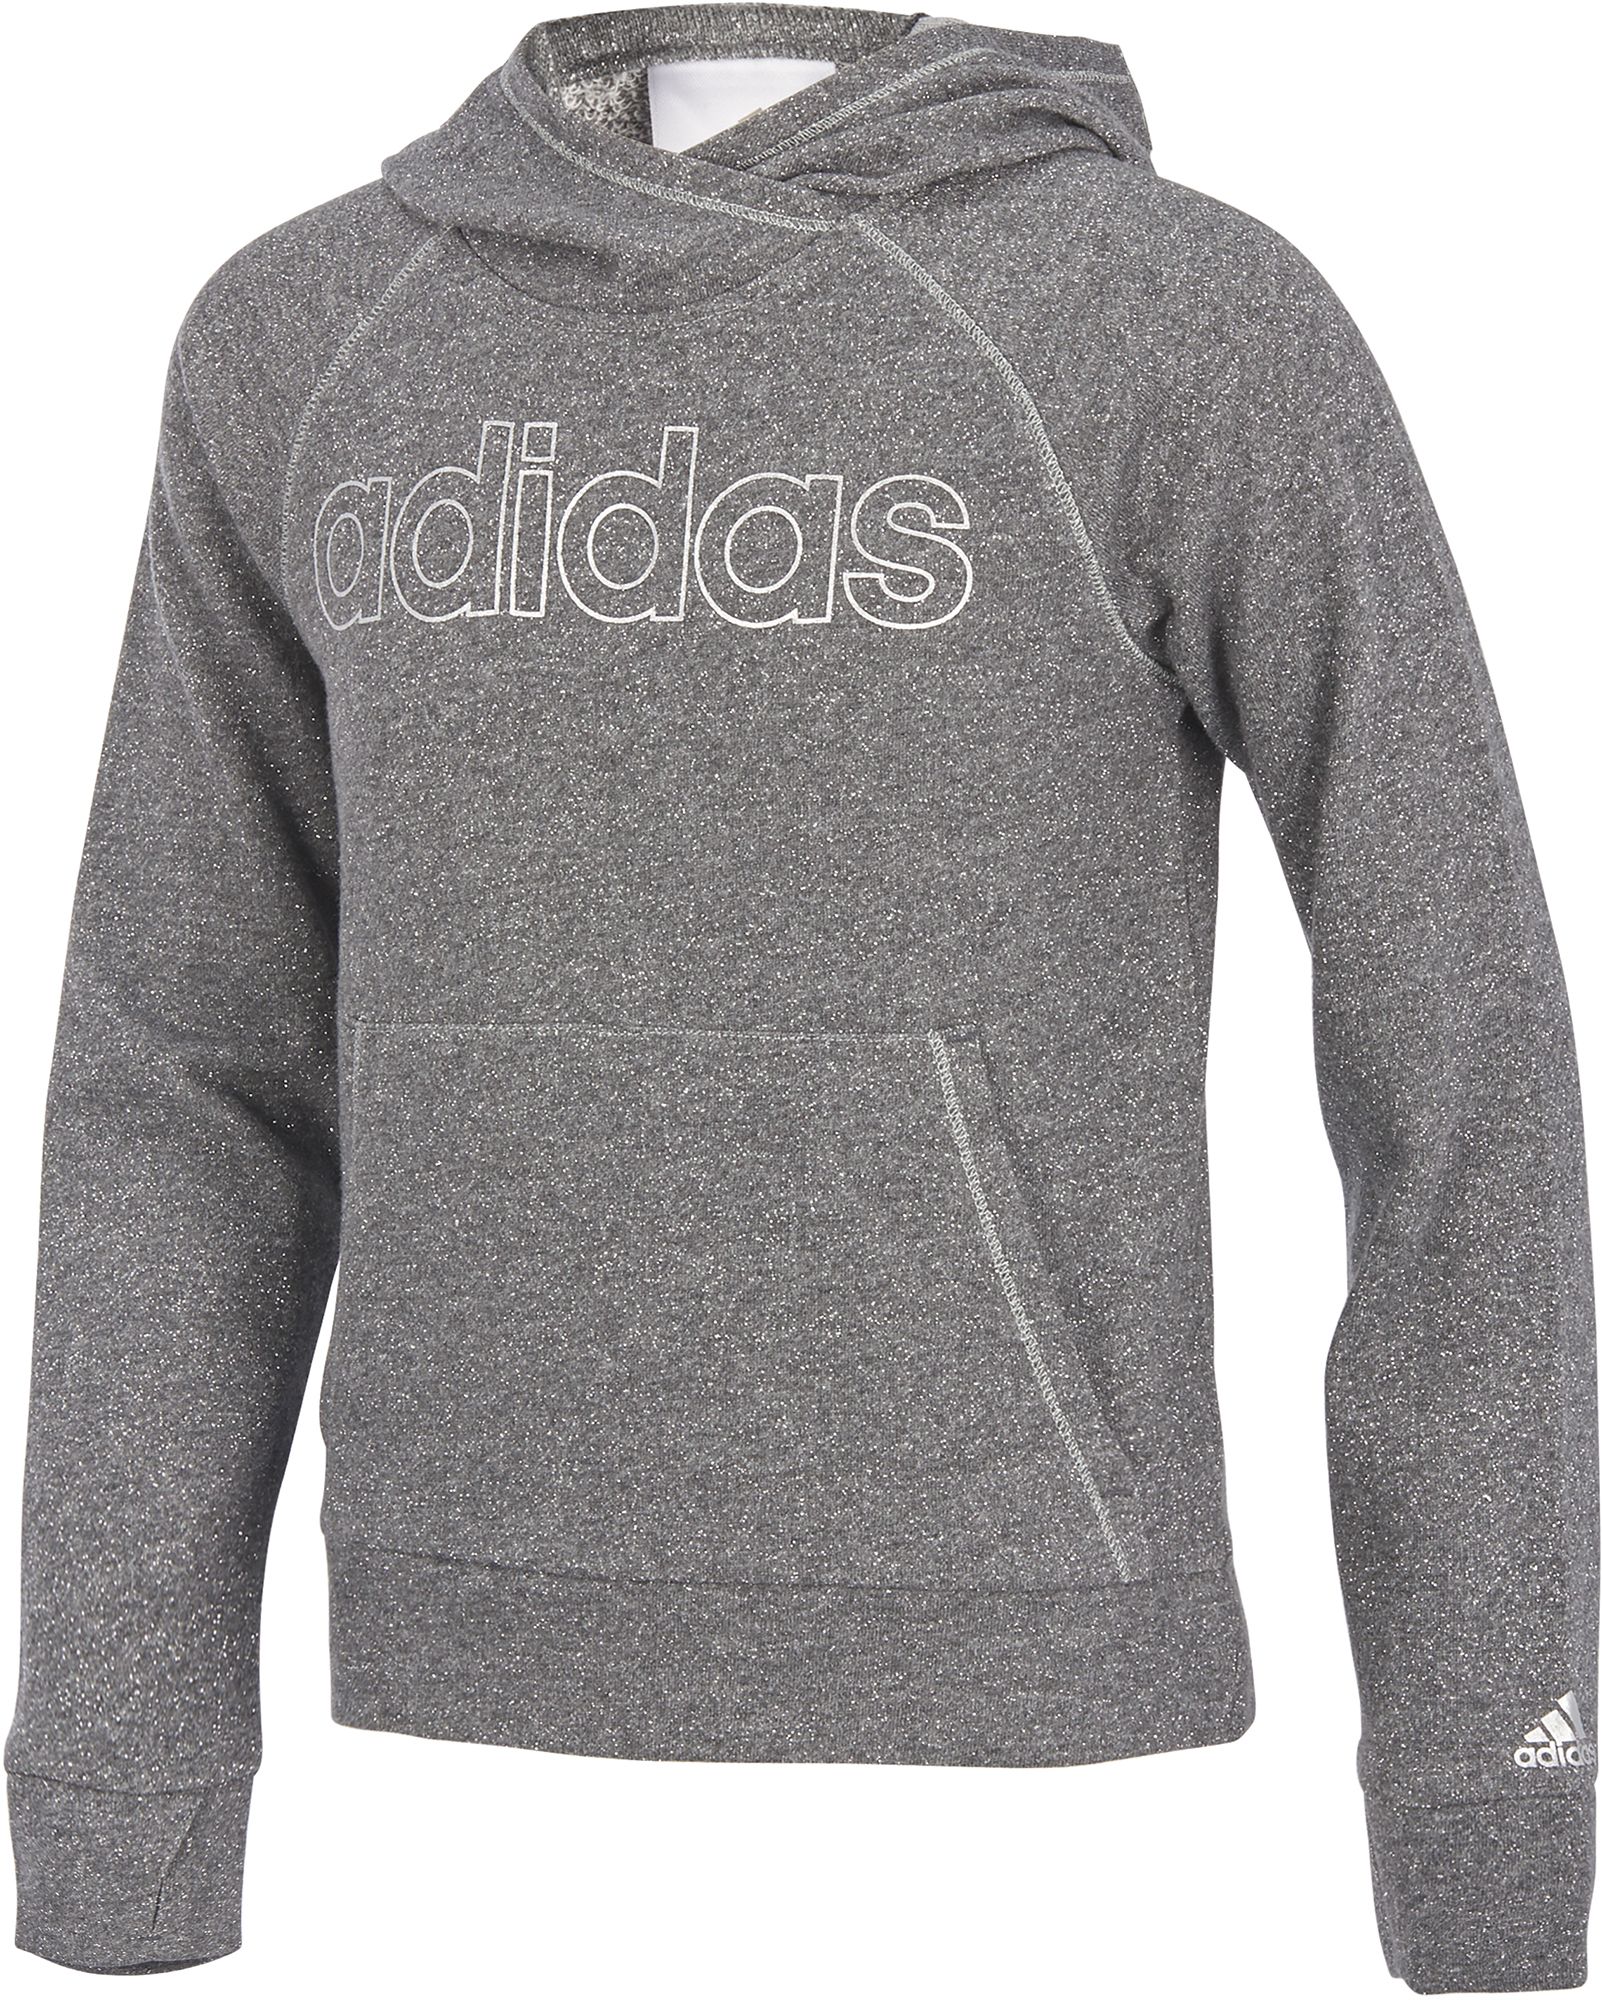 Girls' Hoodies & Sweatshirts | DICK'S Sporting Goods